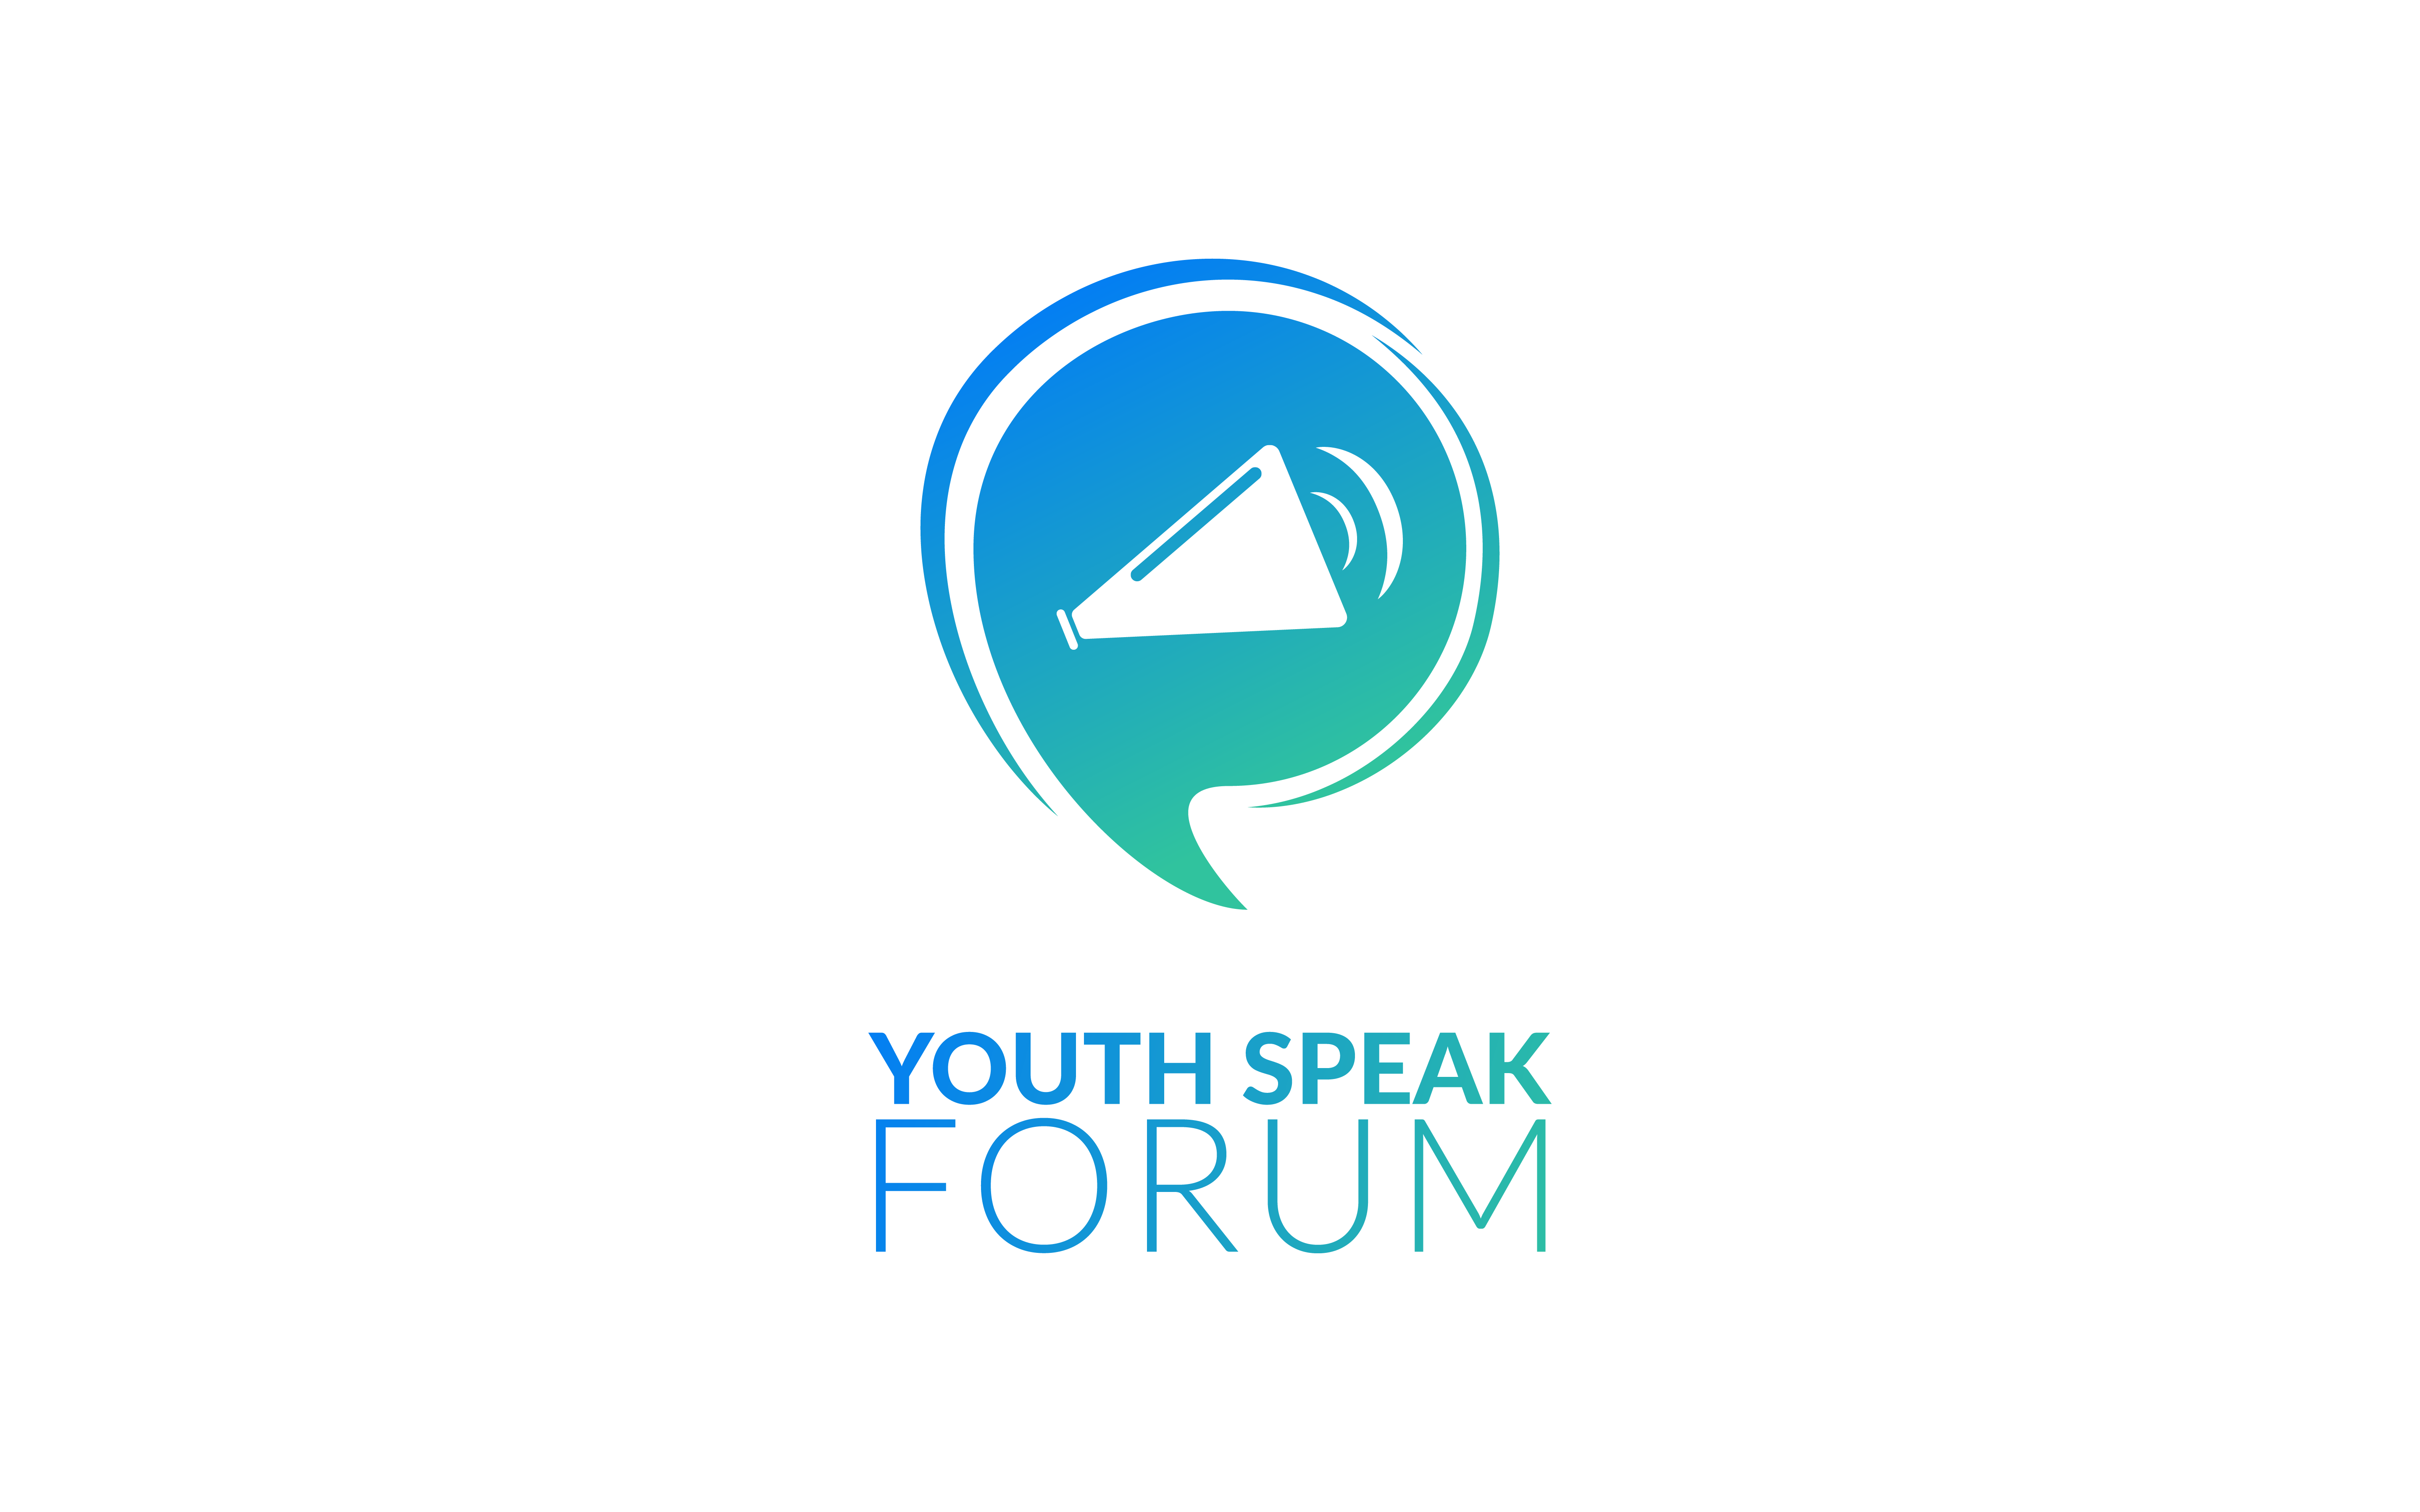 Participate in our event YouthSpeak Forum